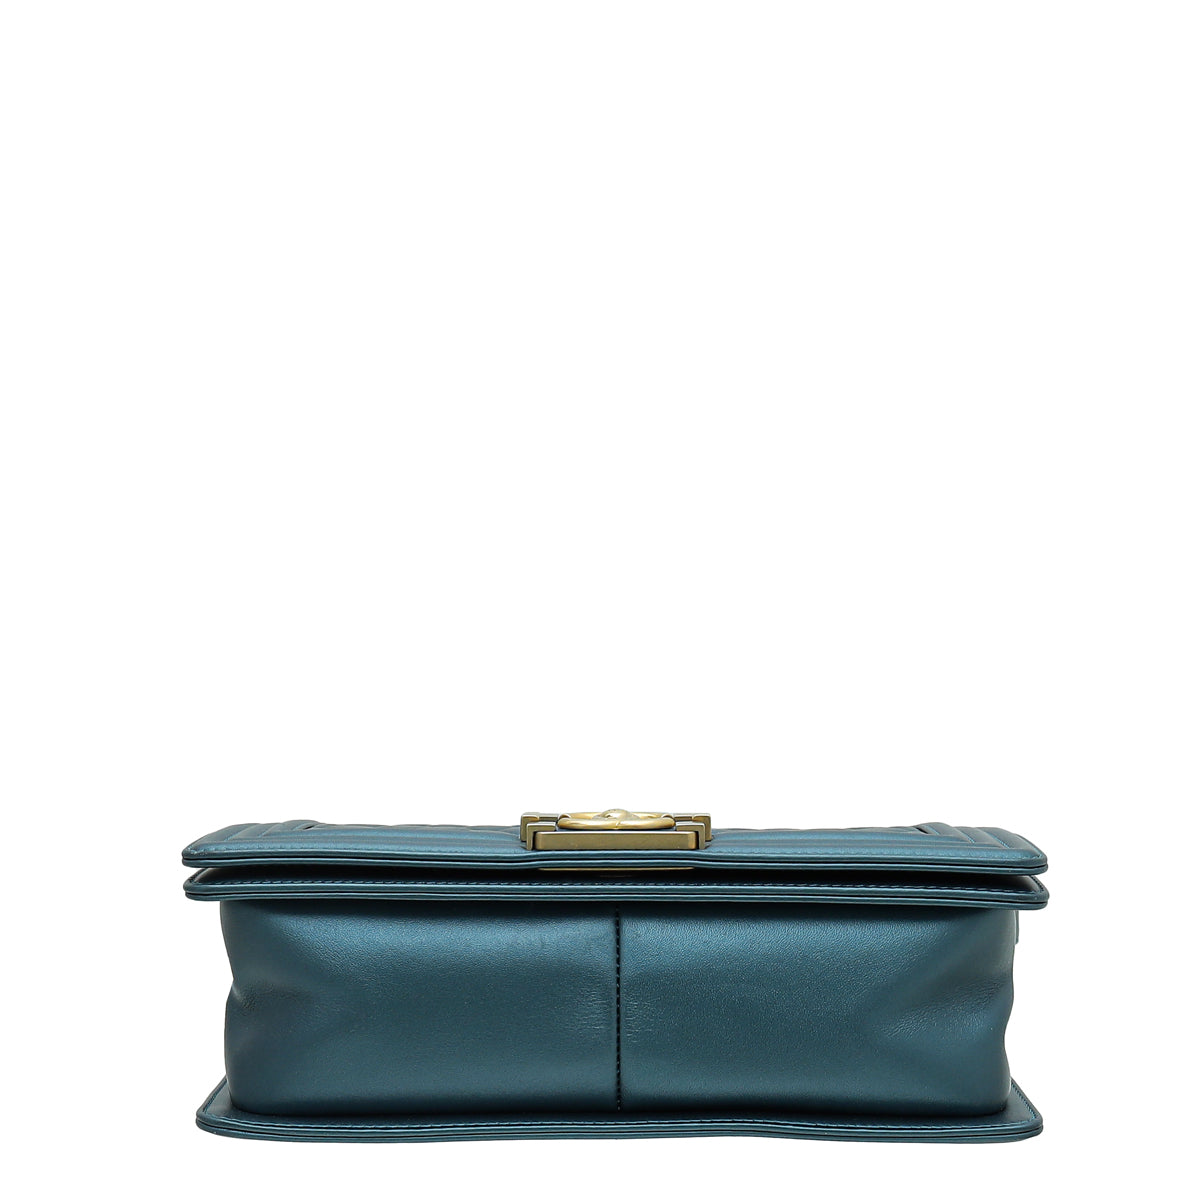 Chanel Metallic Bluegreen Le Boy - Spring/Summer Medium Bag